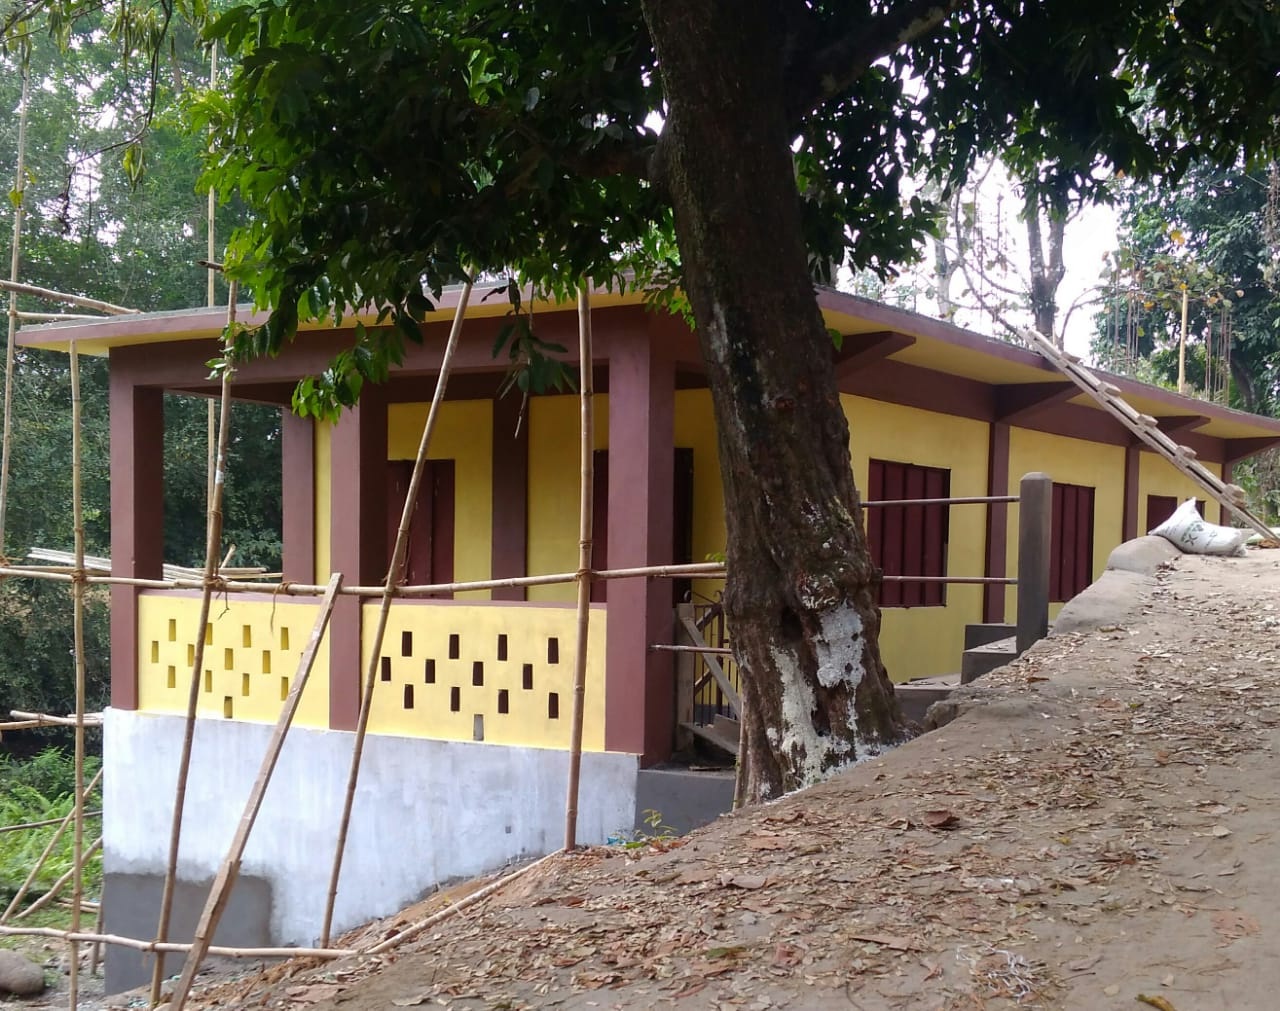  Construction of Community Hall at Dangar Dombah village